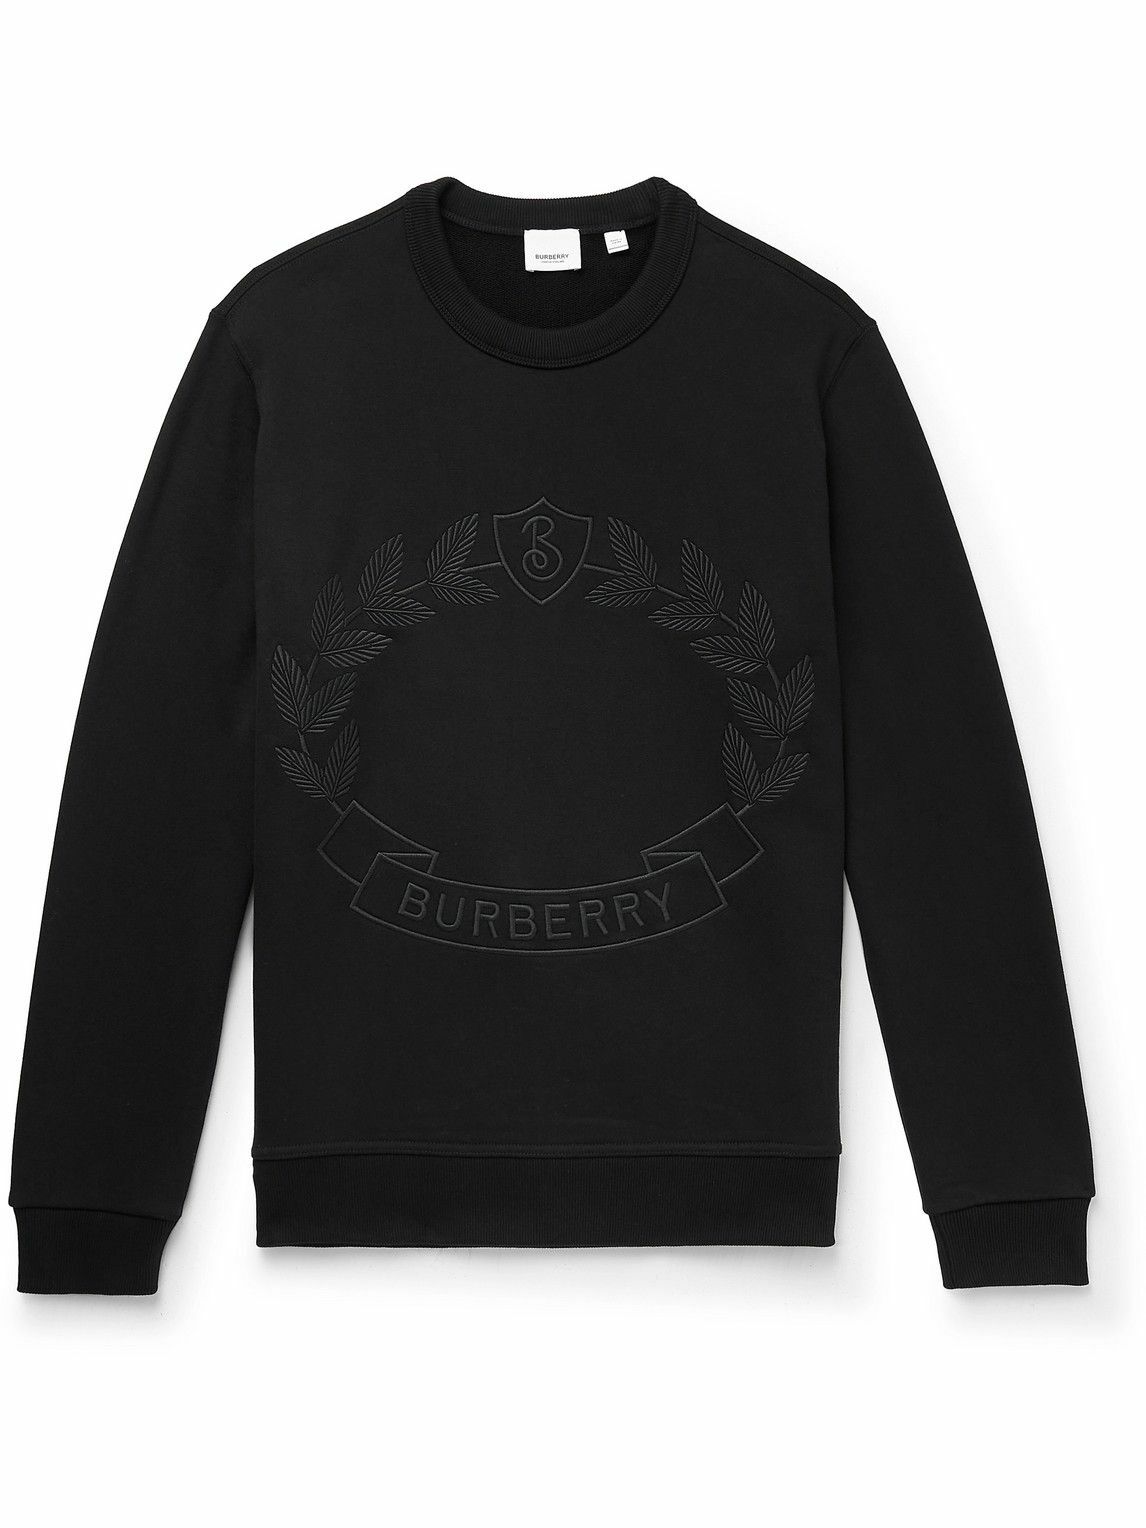 Burberry - Logo-Embroidered Cotton-Jersey Sweatshirt - Black Burberry